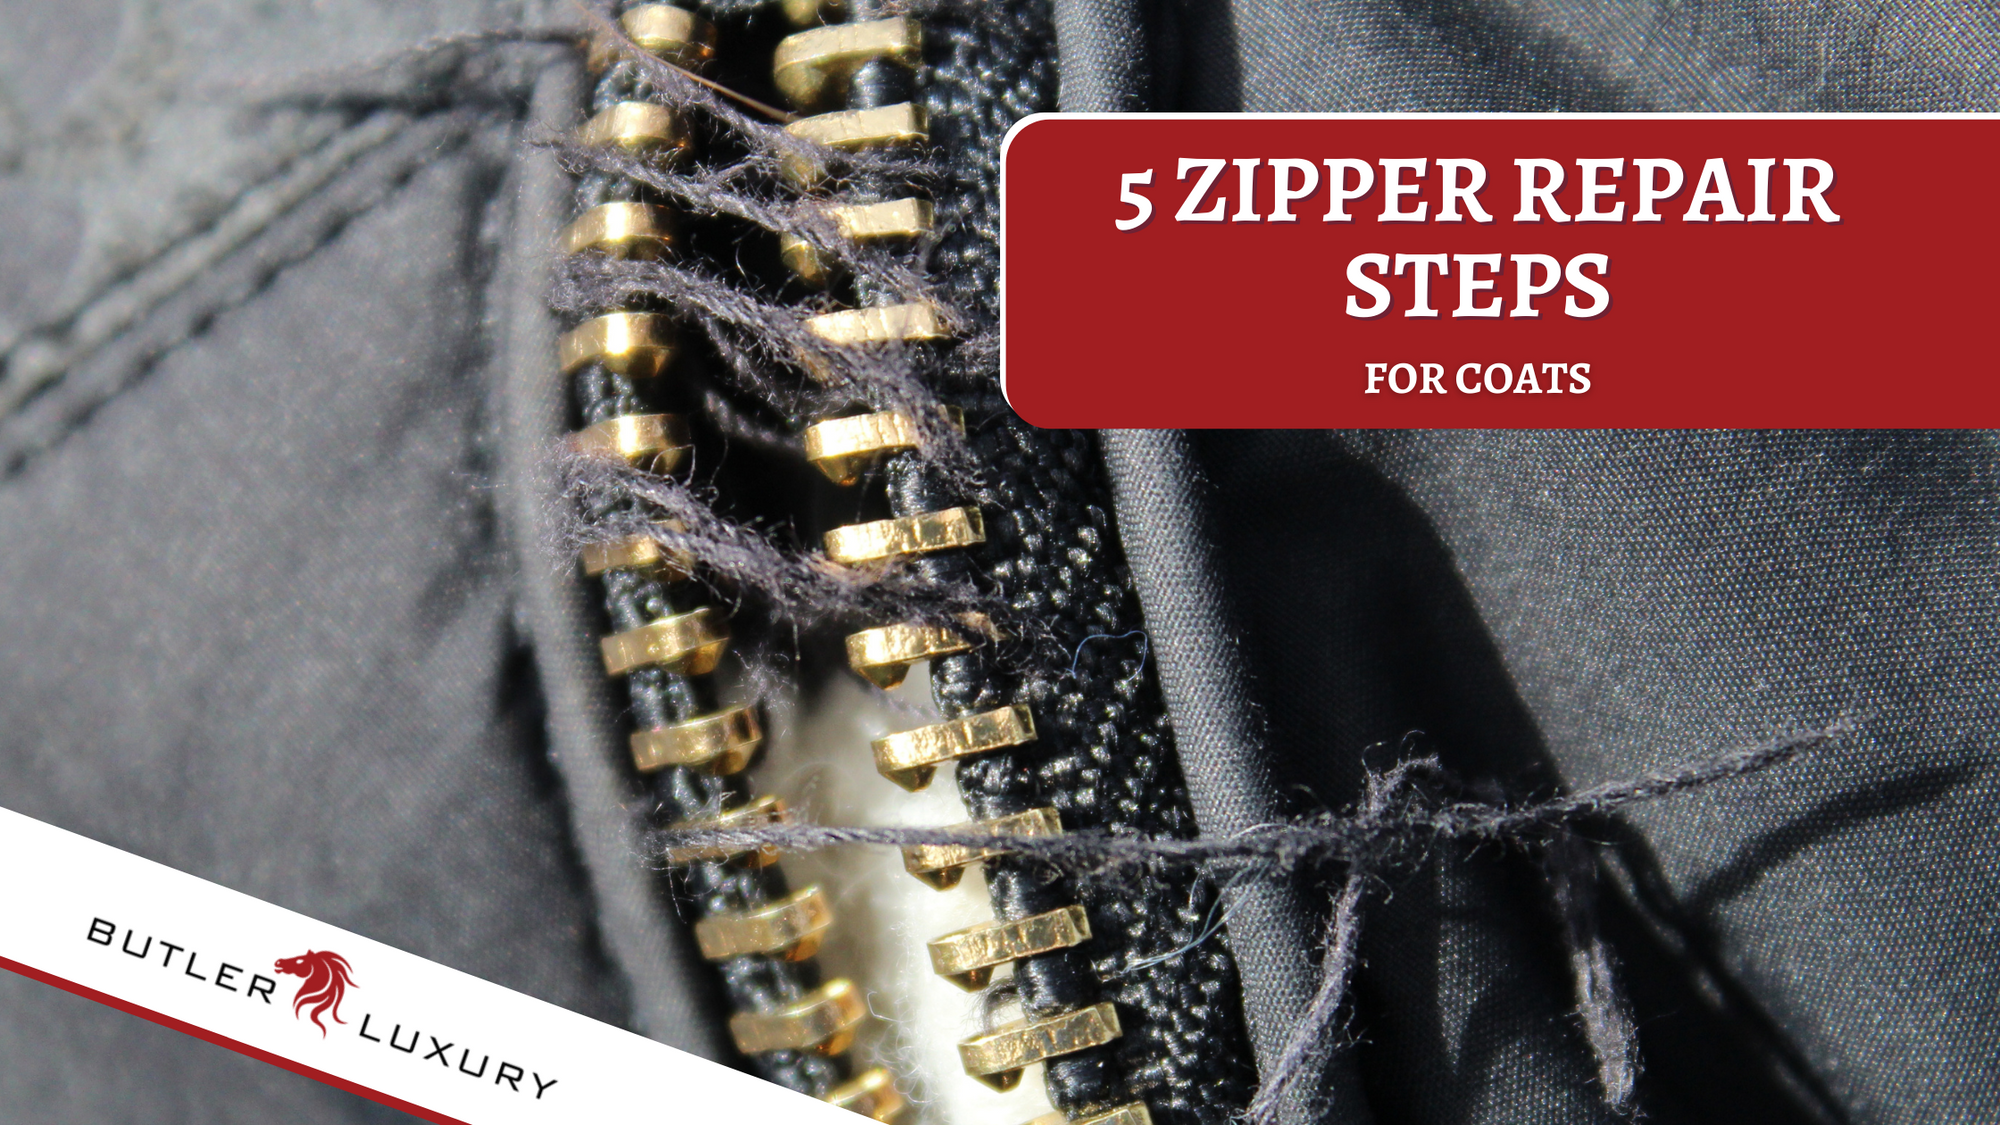 5 Zipper Repair Steps for Coats - Butler Luxury